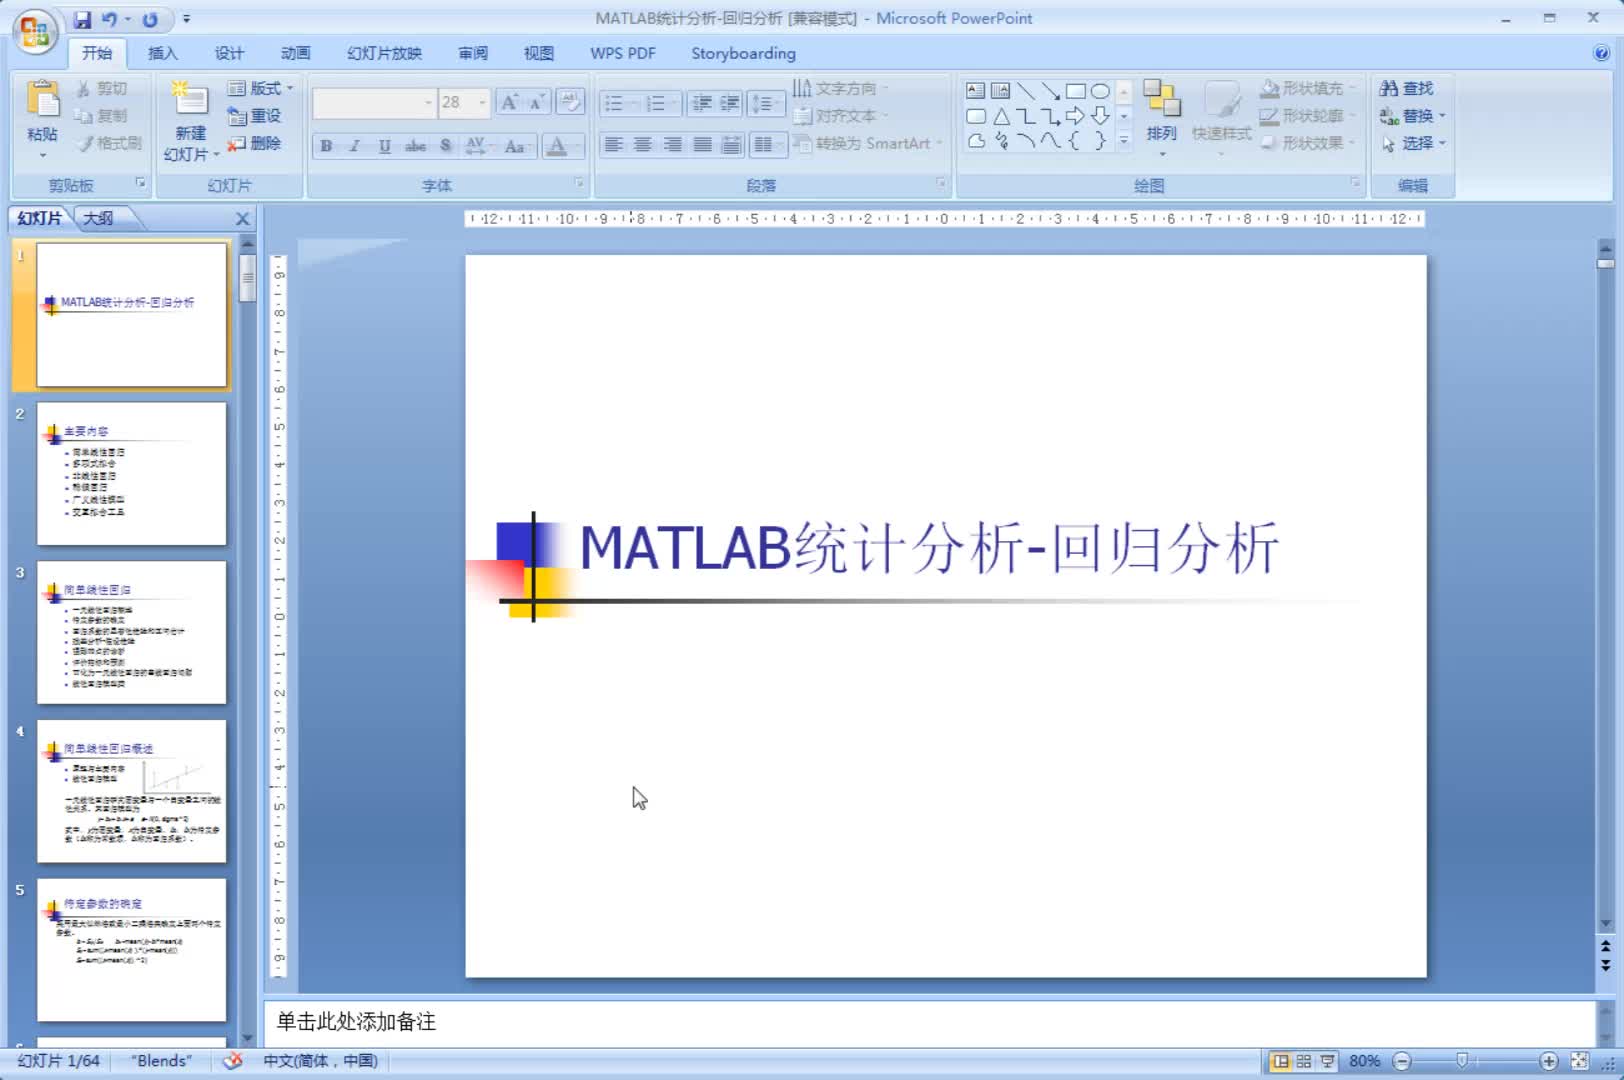 MATLAB统计分析-回归分析